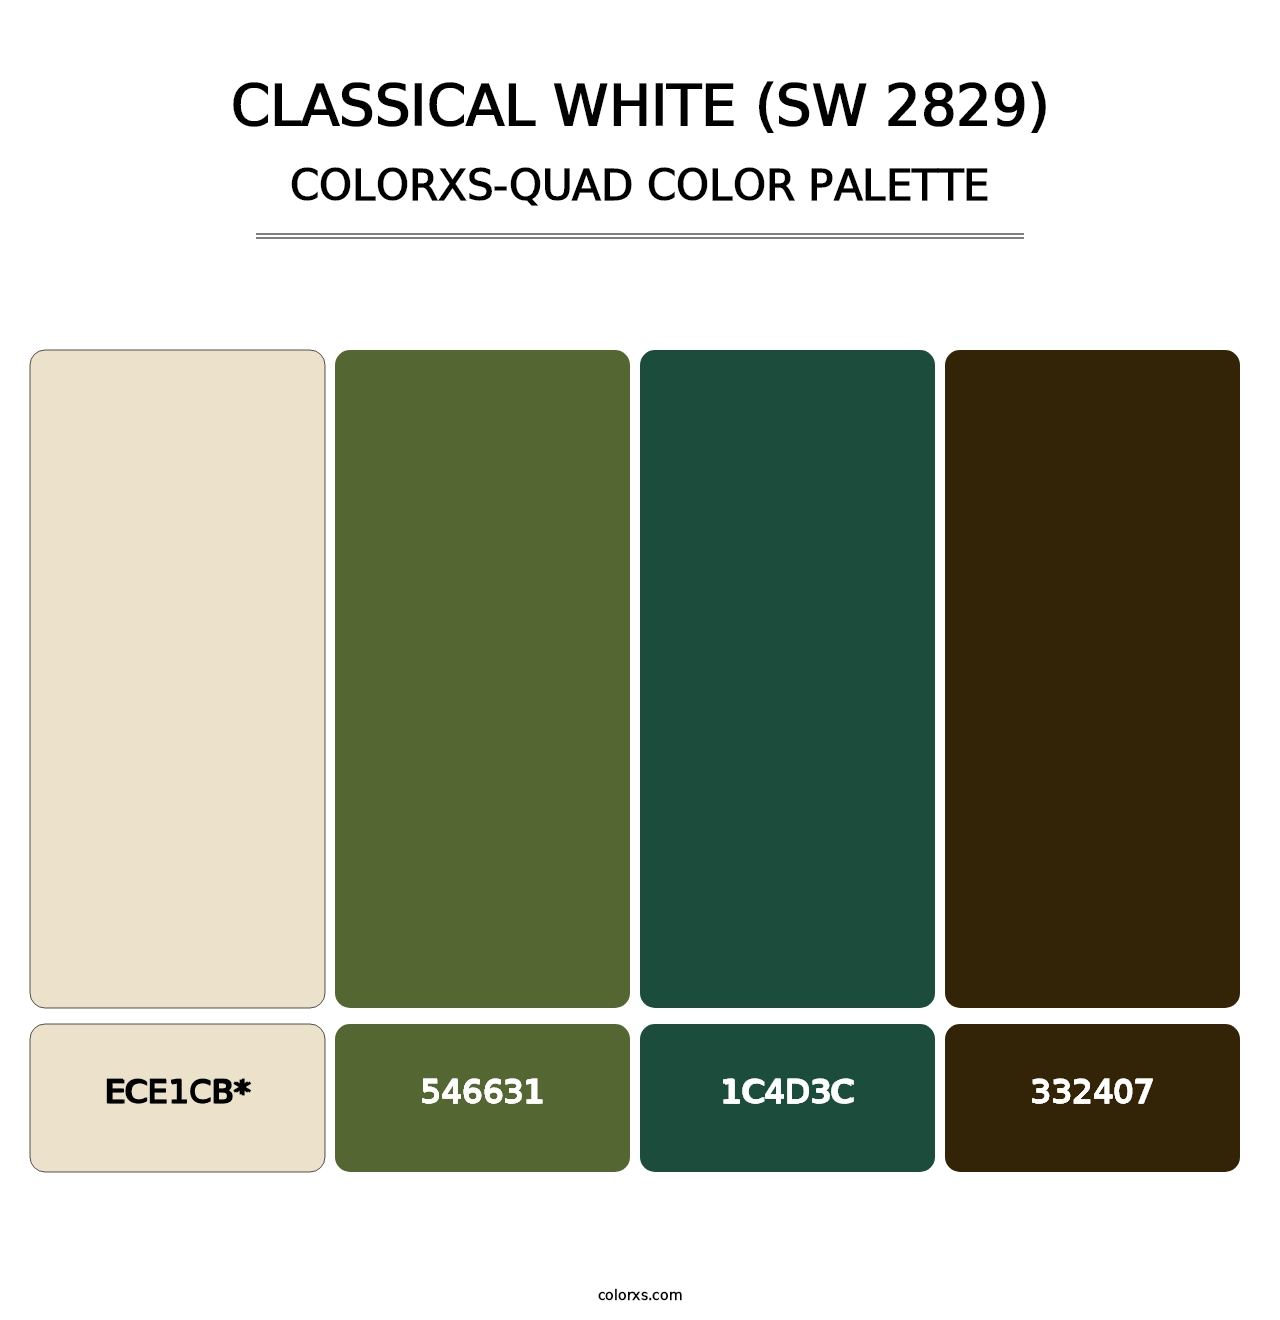 Classical White (SW 2829) - Colorxs Quad Palette